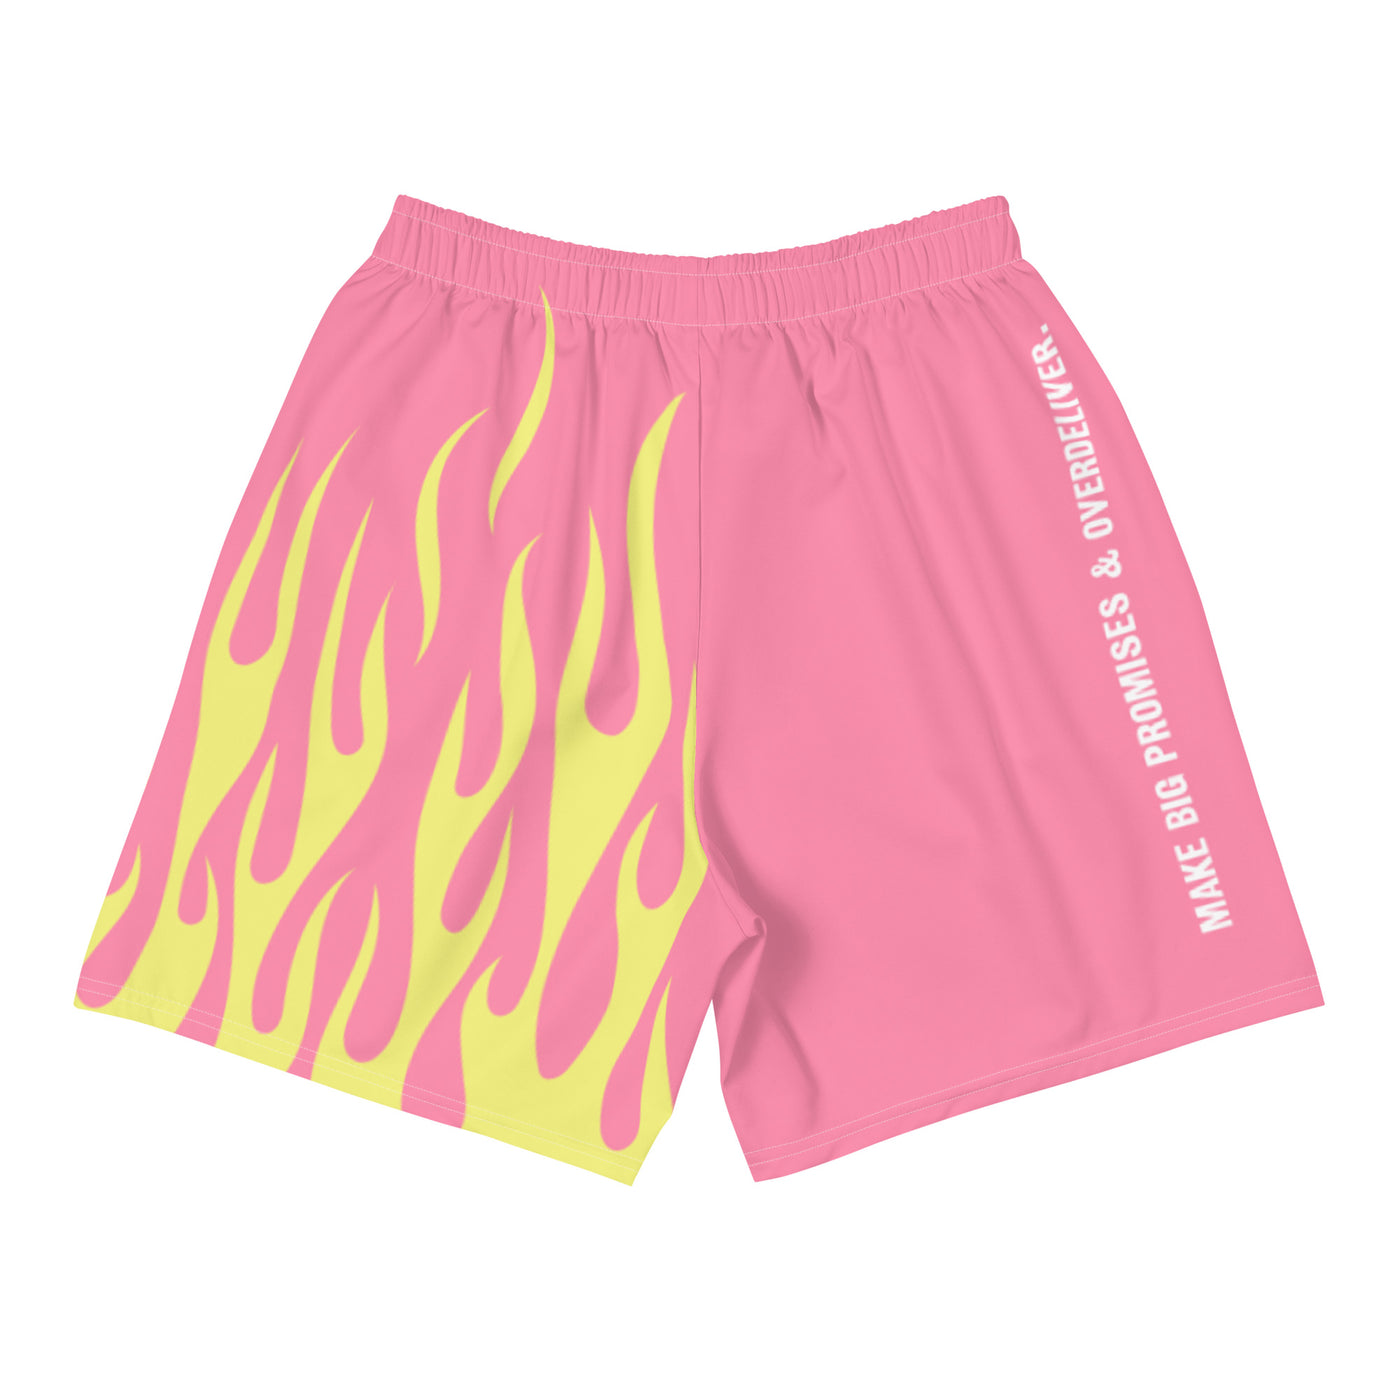 GOAT Worldwide Fire Training Shorts (Pink & Green)